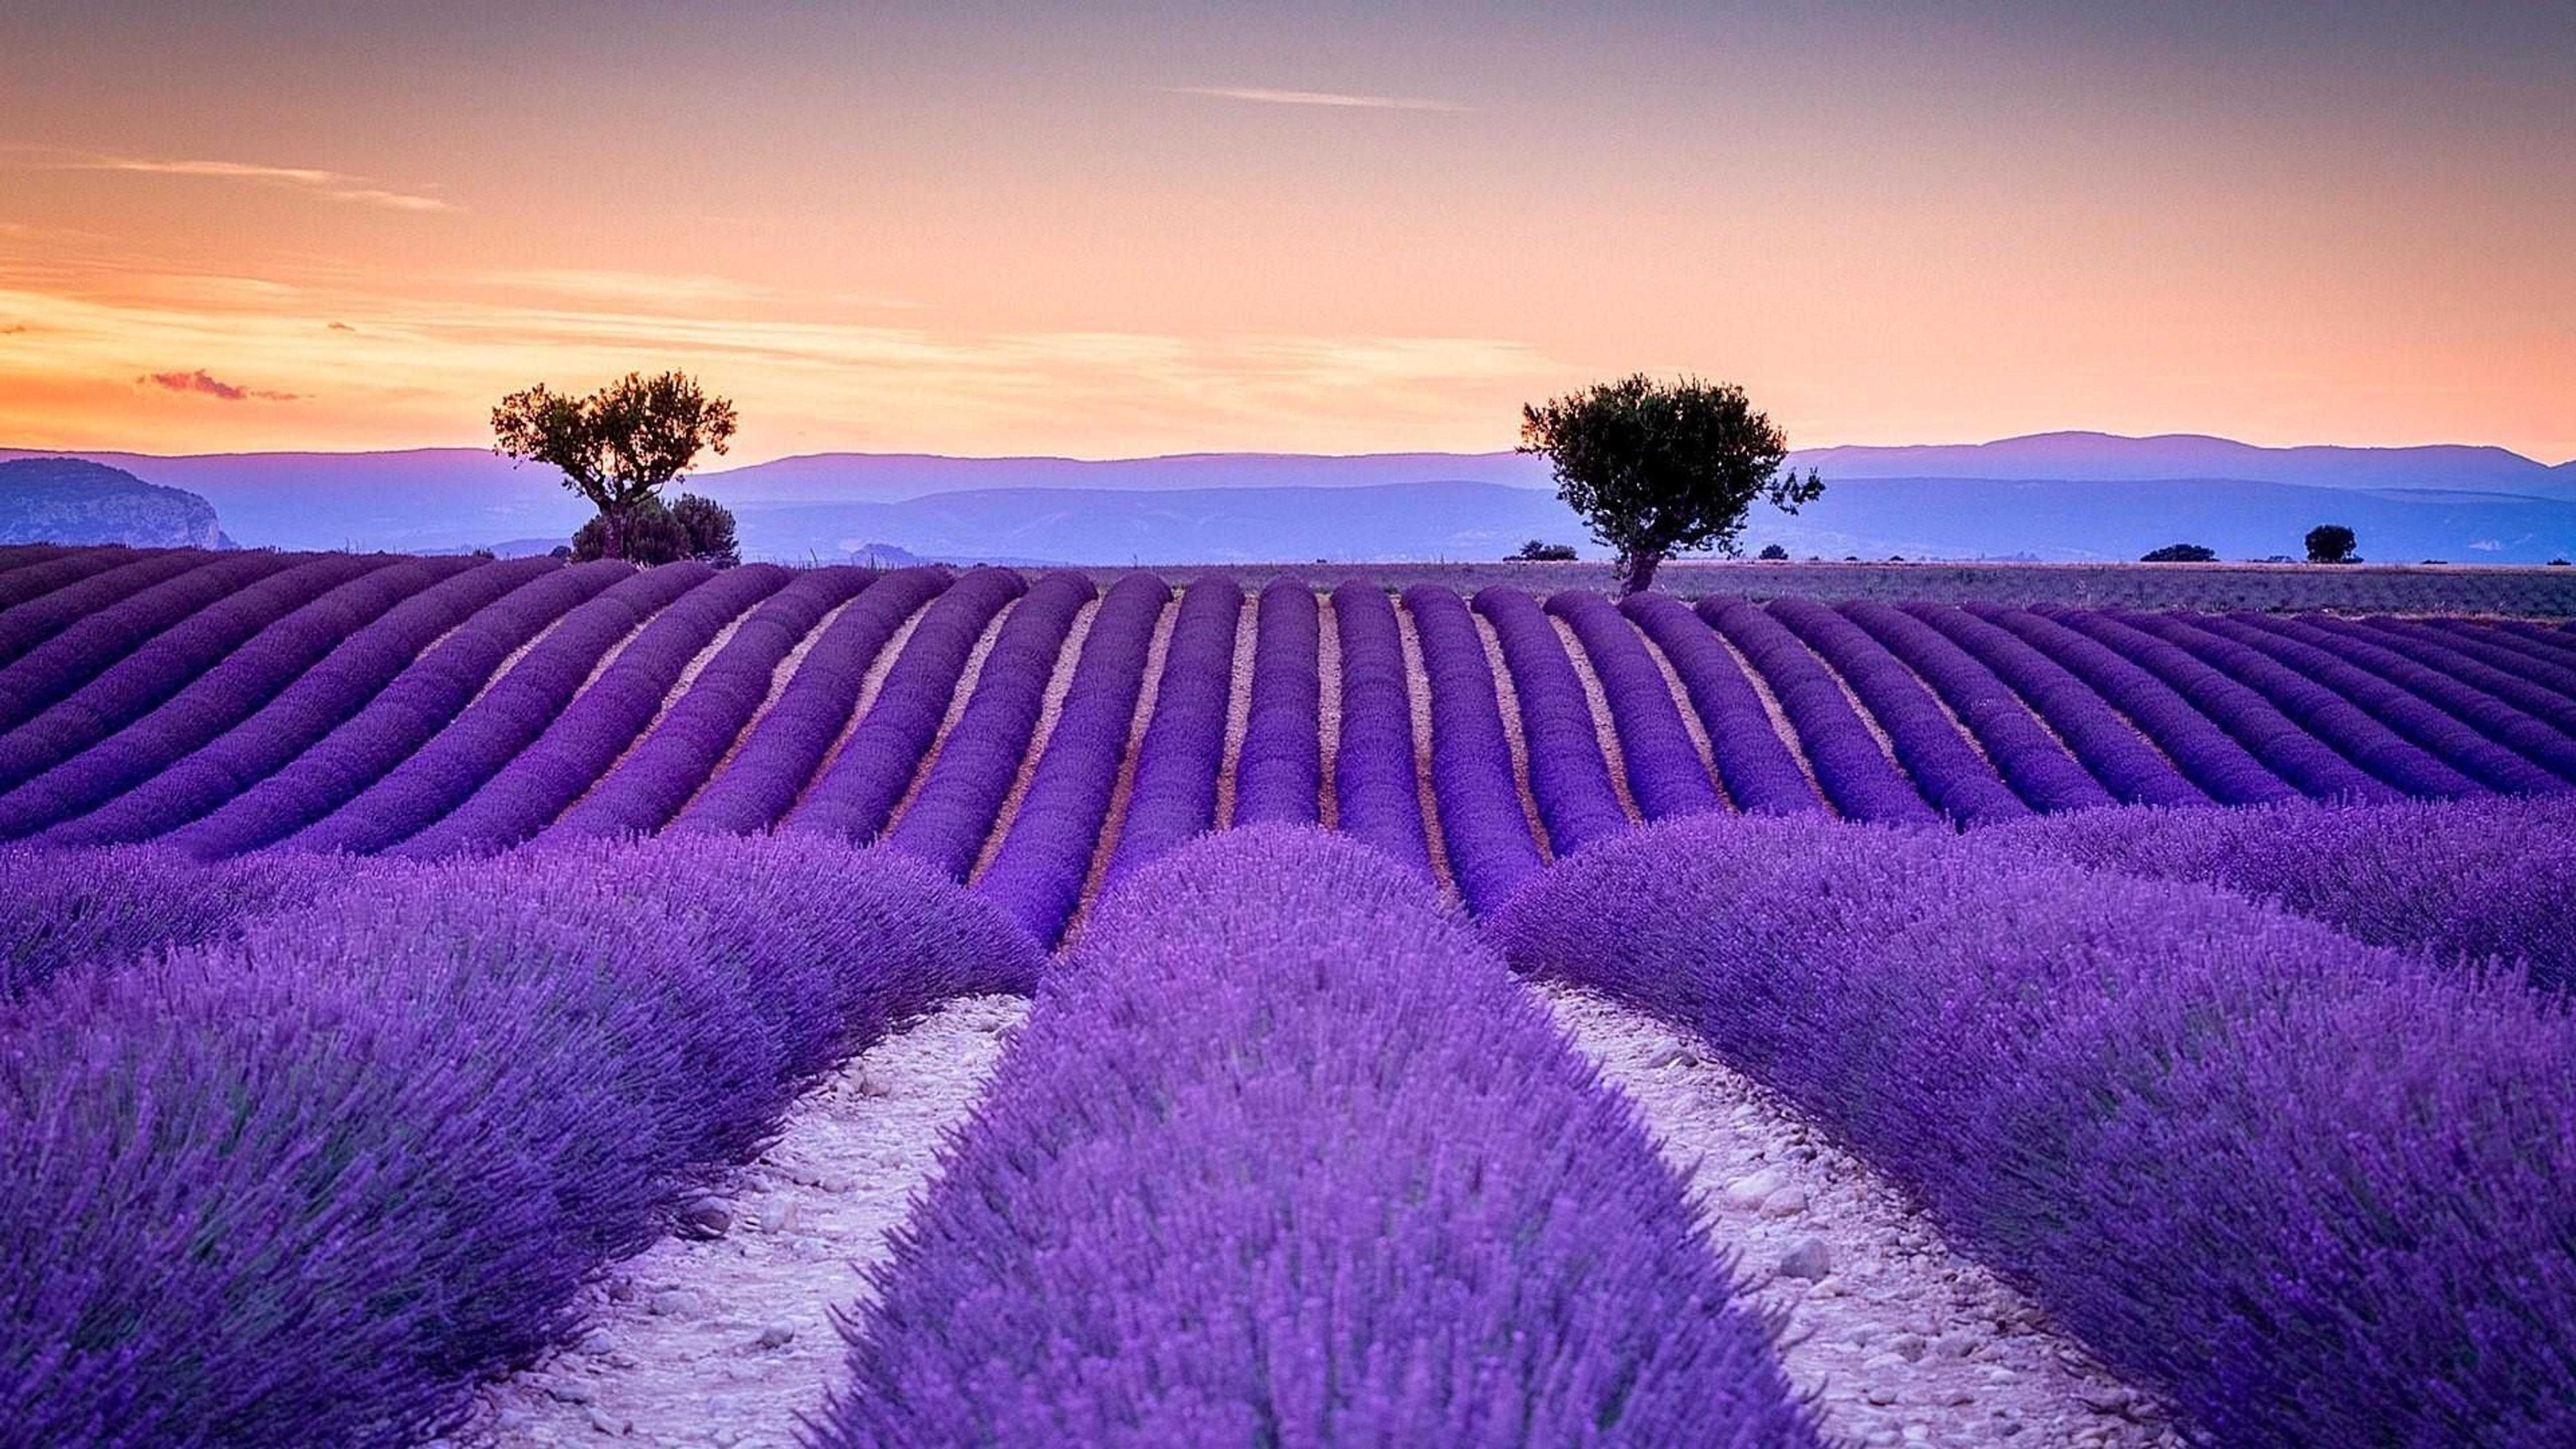 Big wonderful Lavender field - Love purple color and perfume